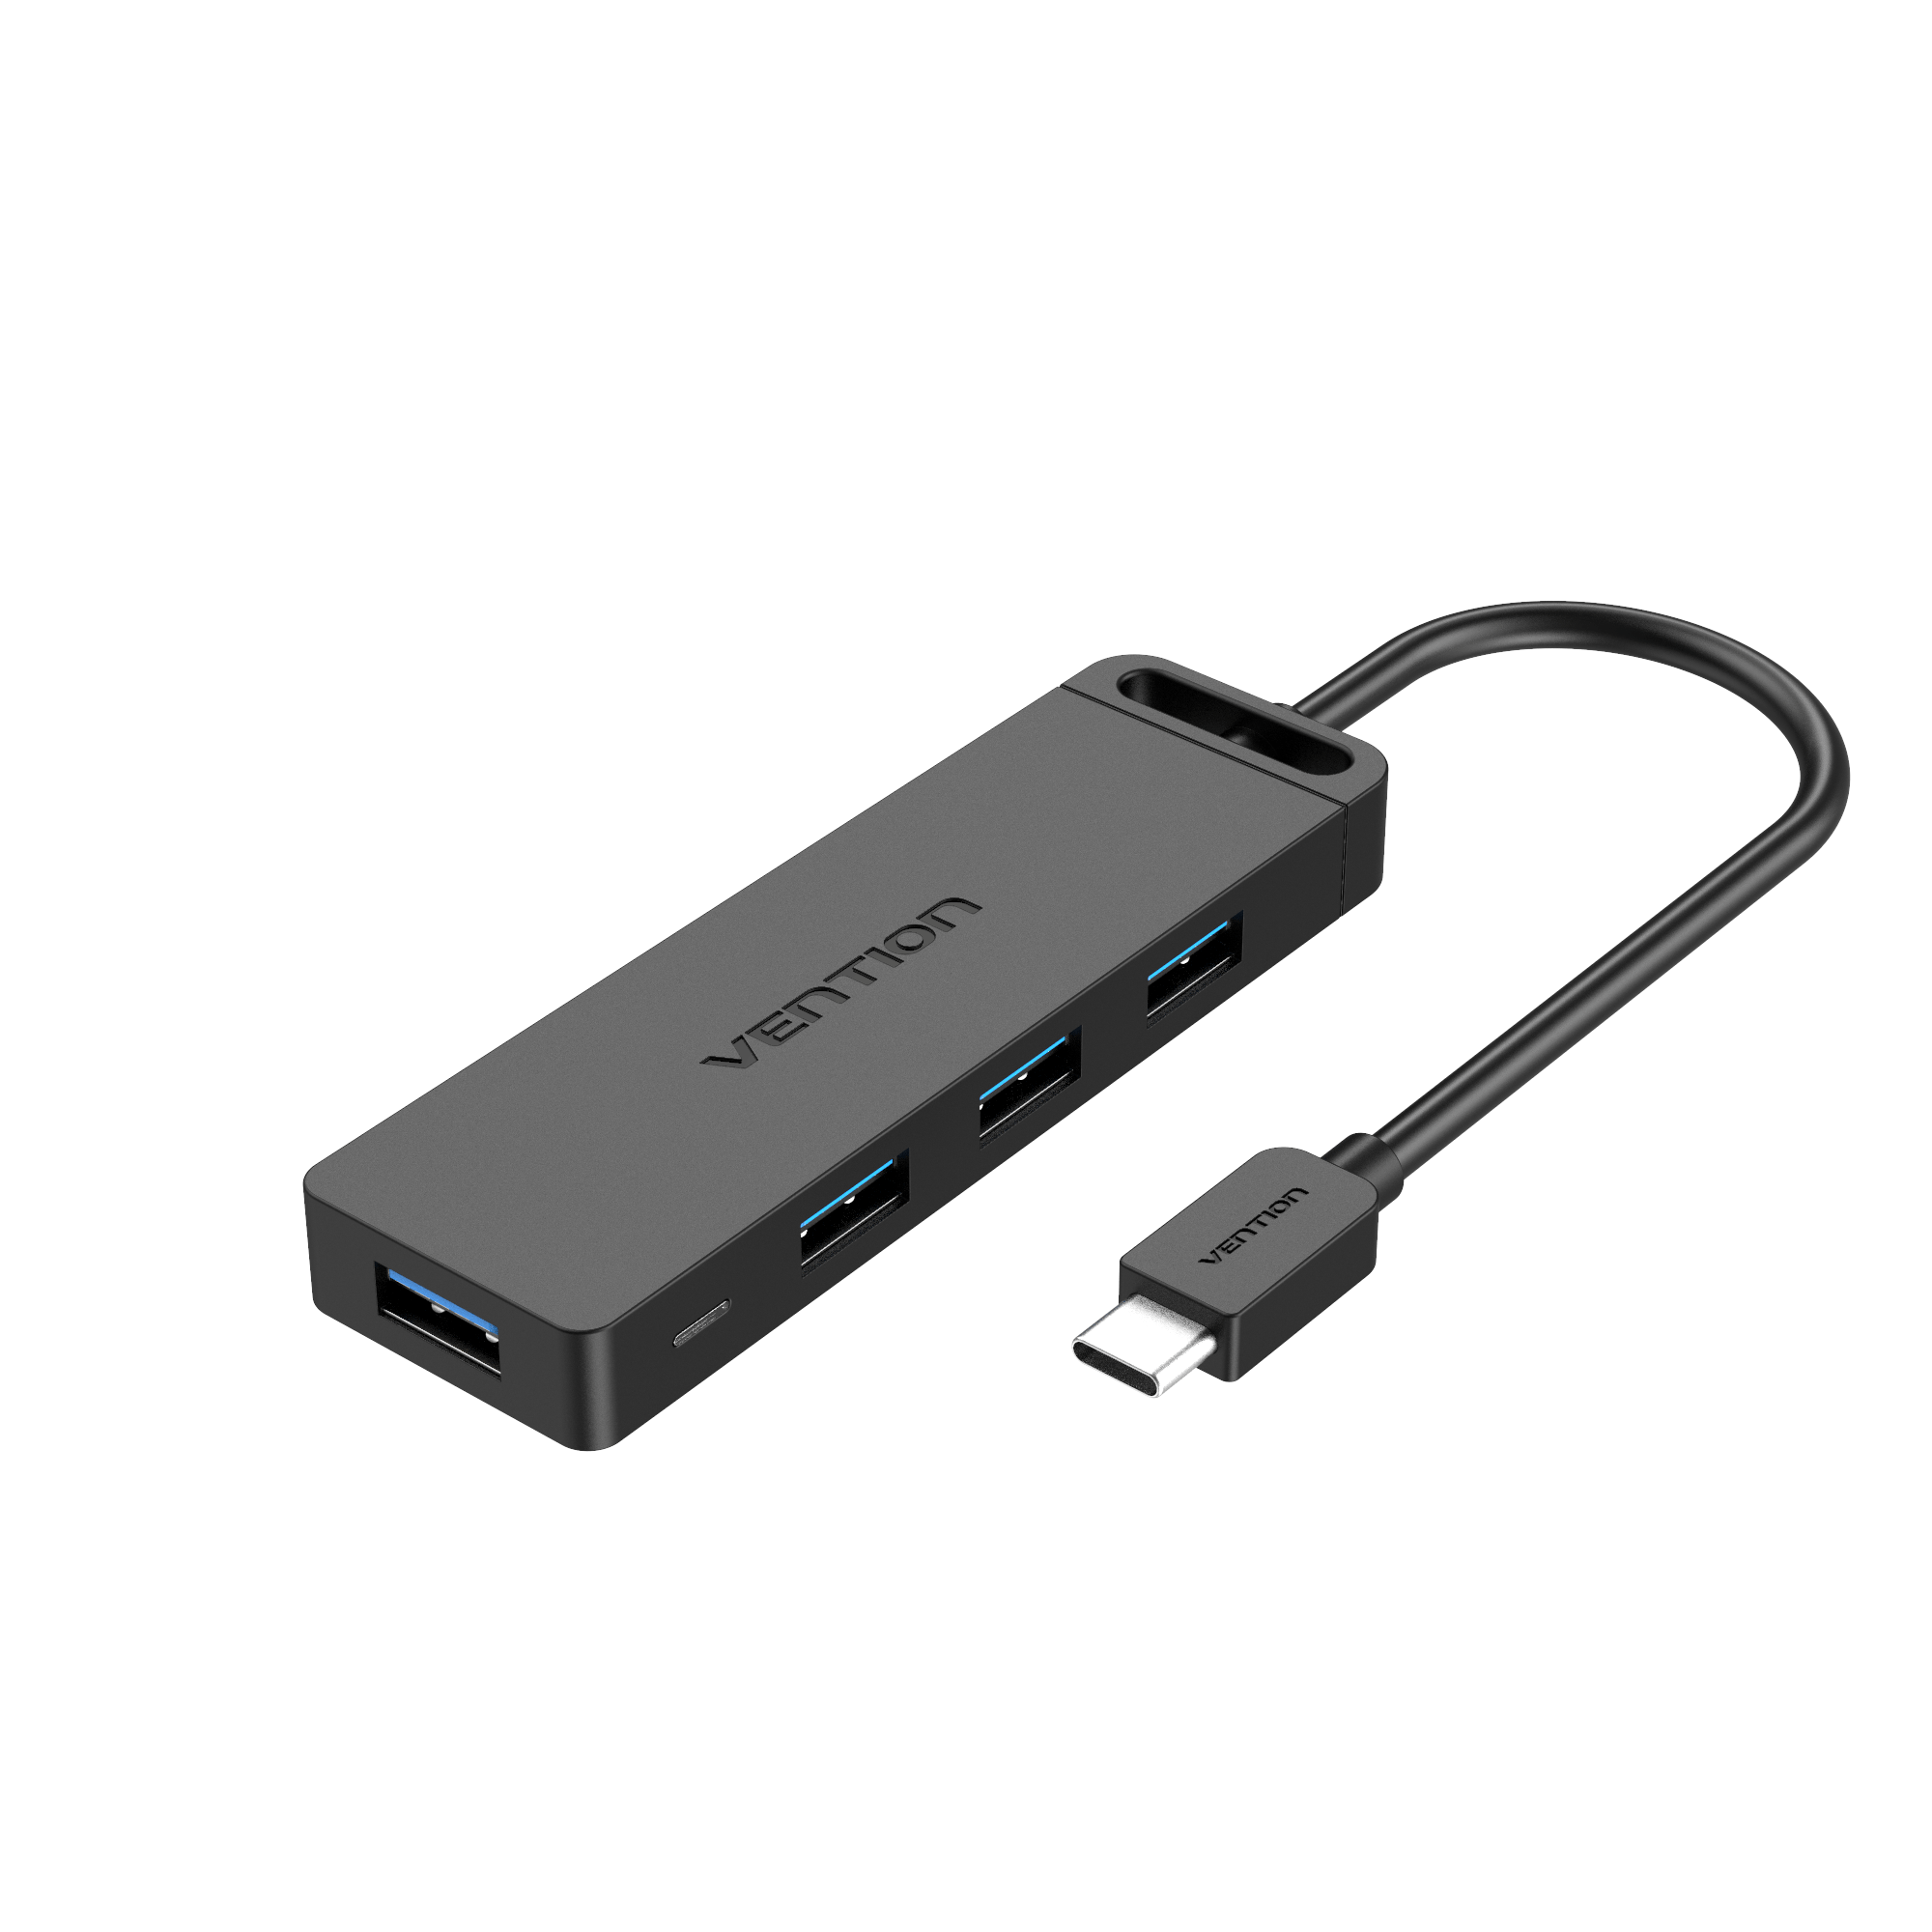 USB 3.0 4 Port Hub + USB-C Cable (USB Type-C)